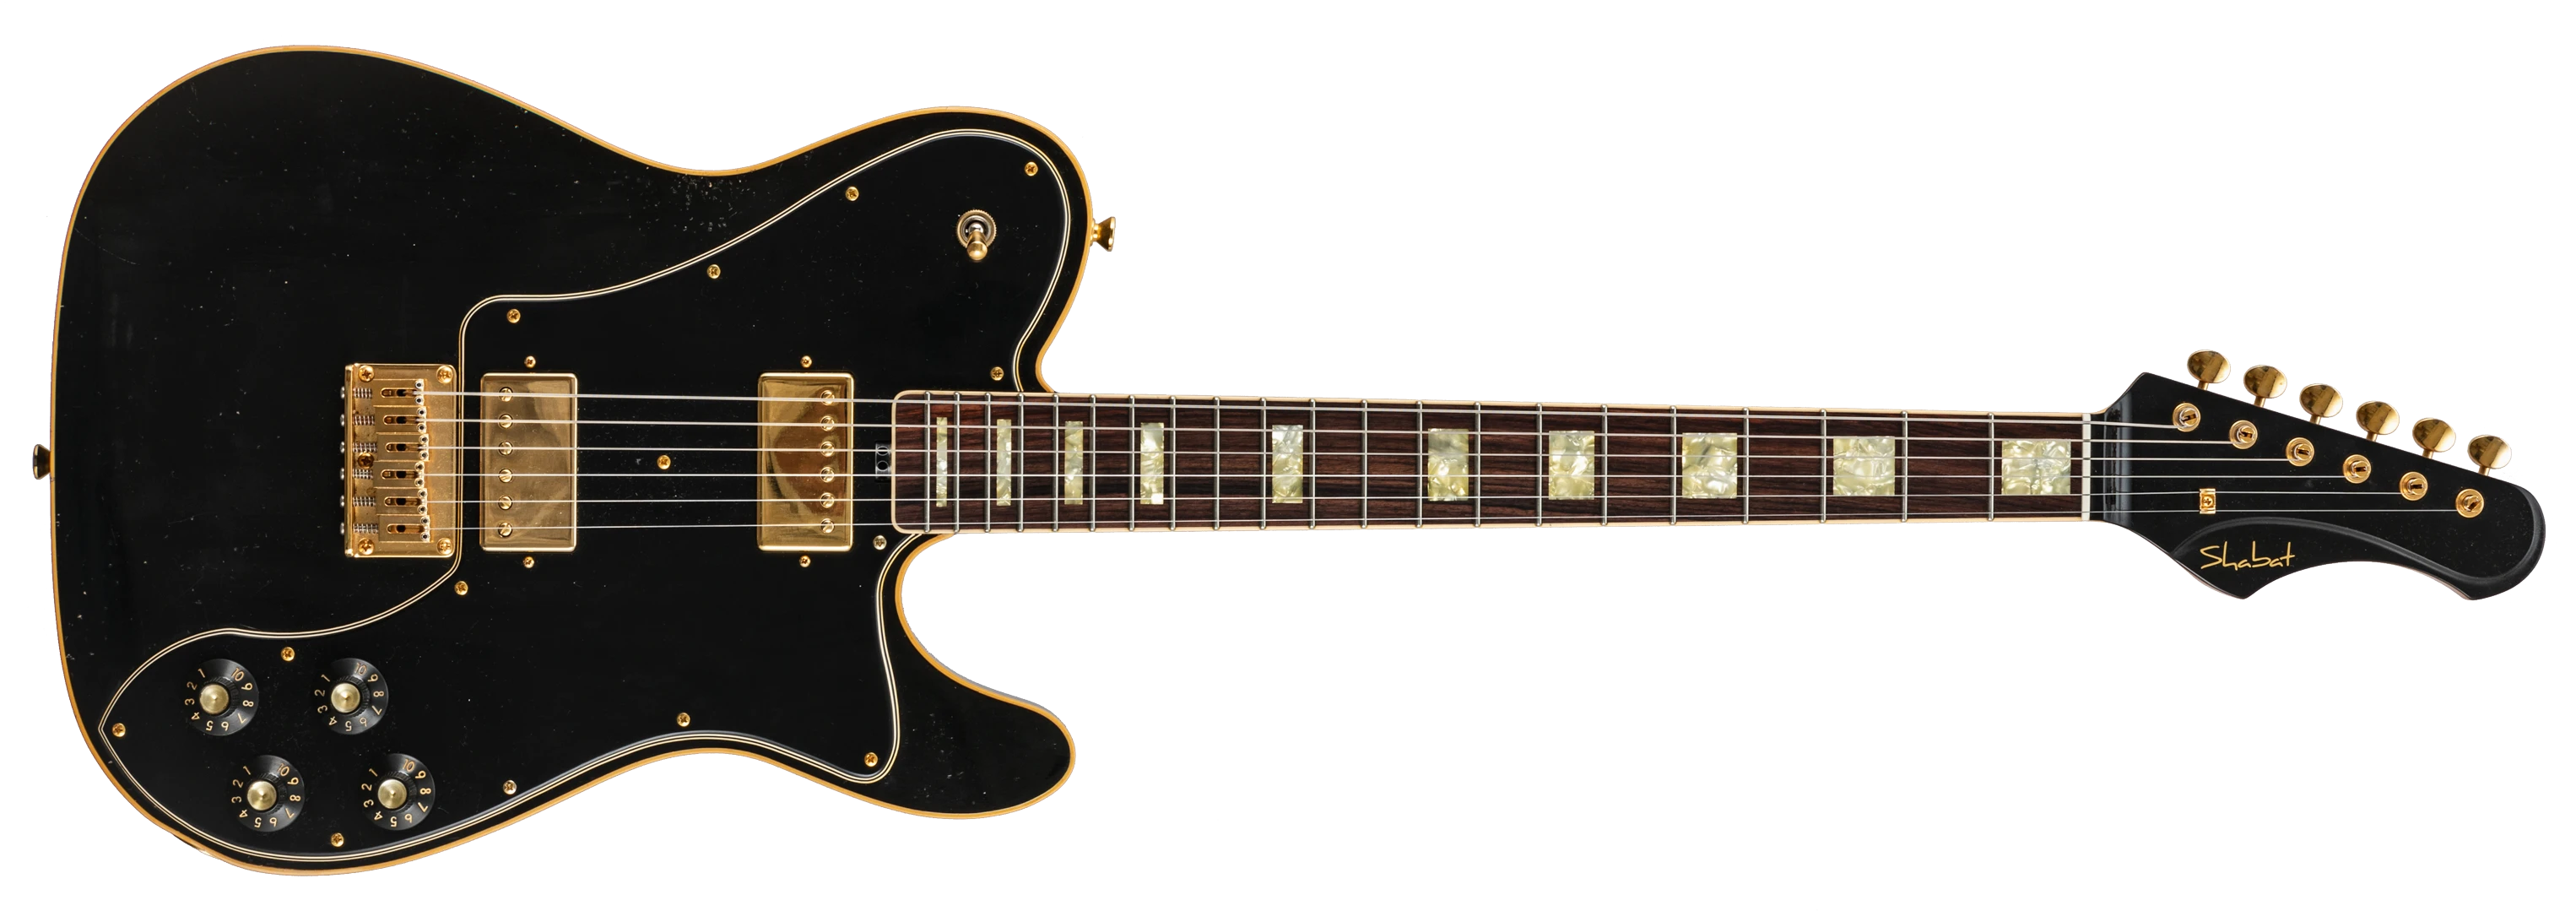 Shabat Guitars Lion Deluxe black, light aging, flamed maple neck